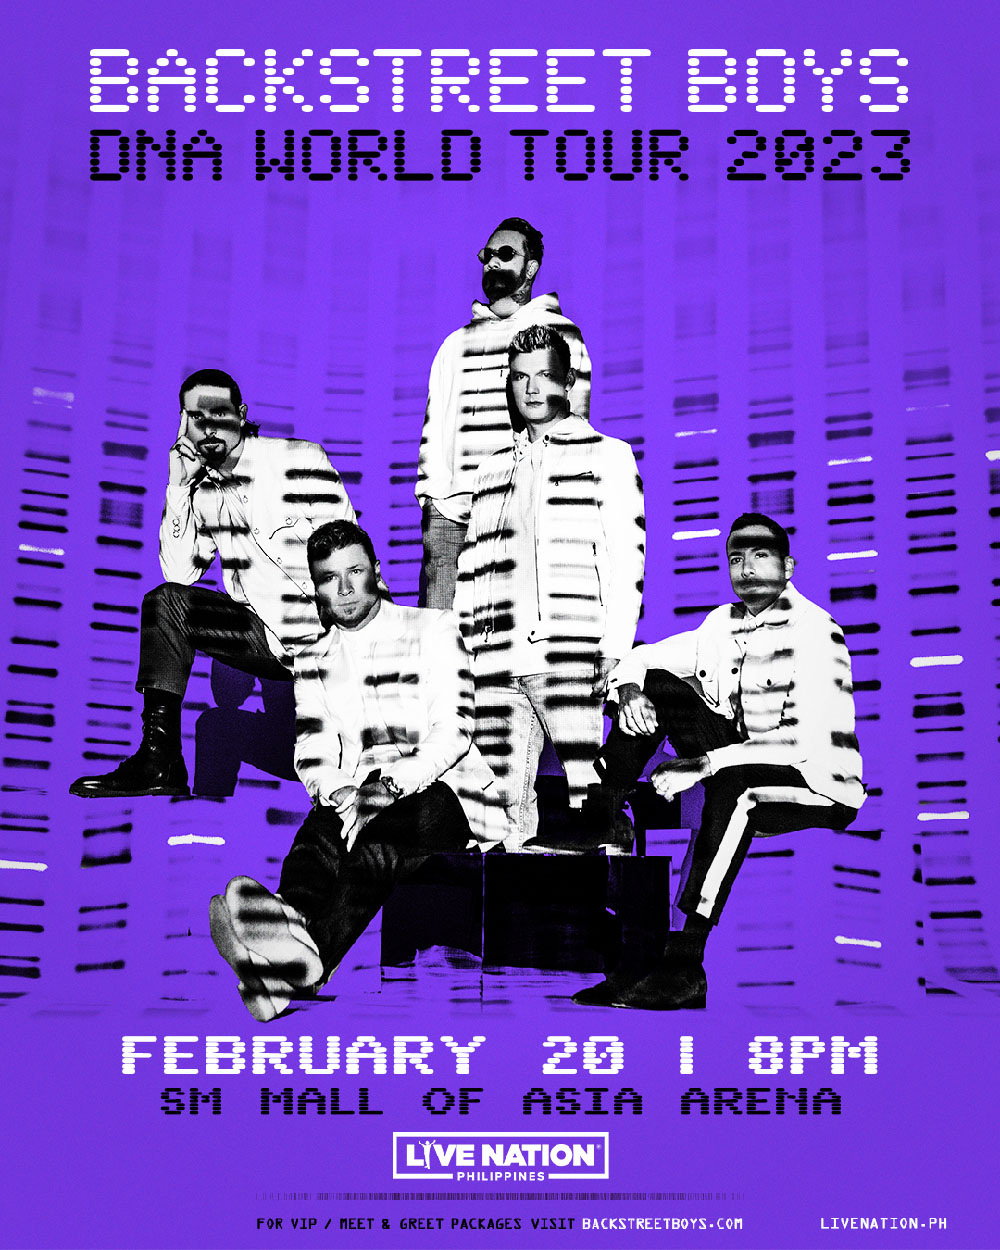 Backstreet boys DNA poster